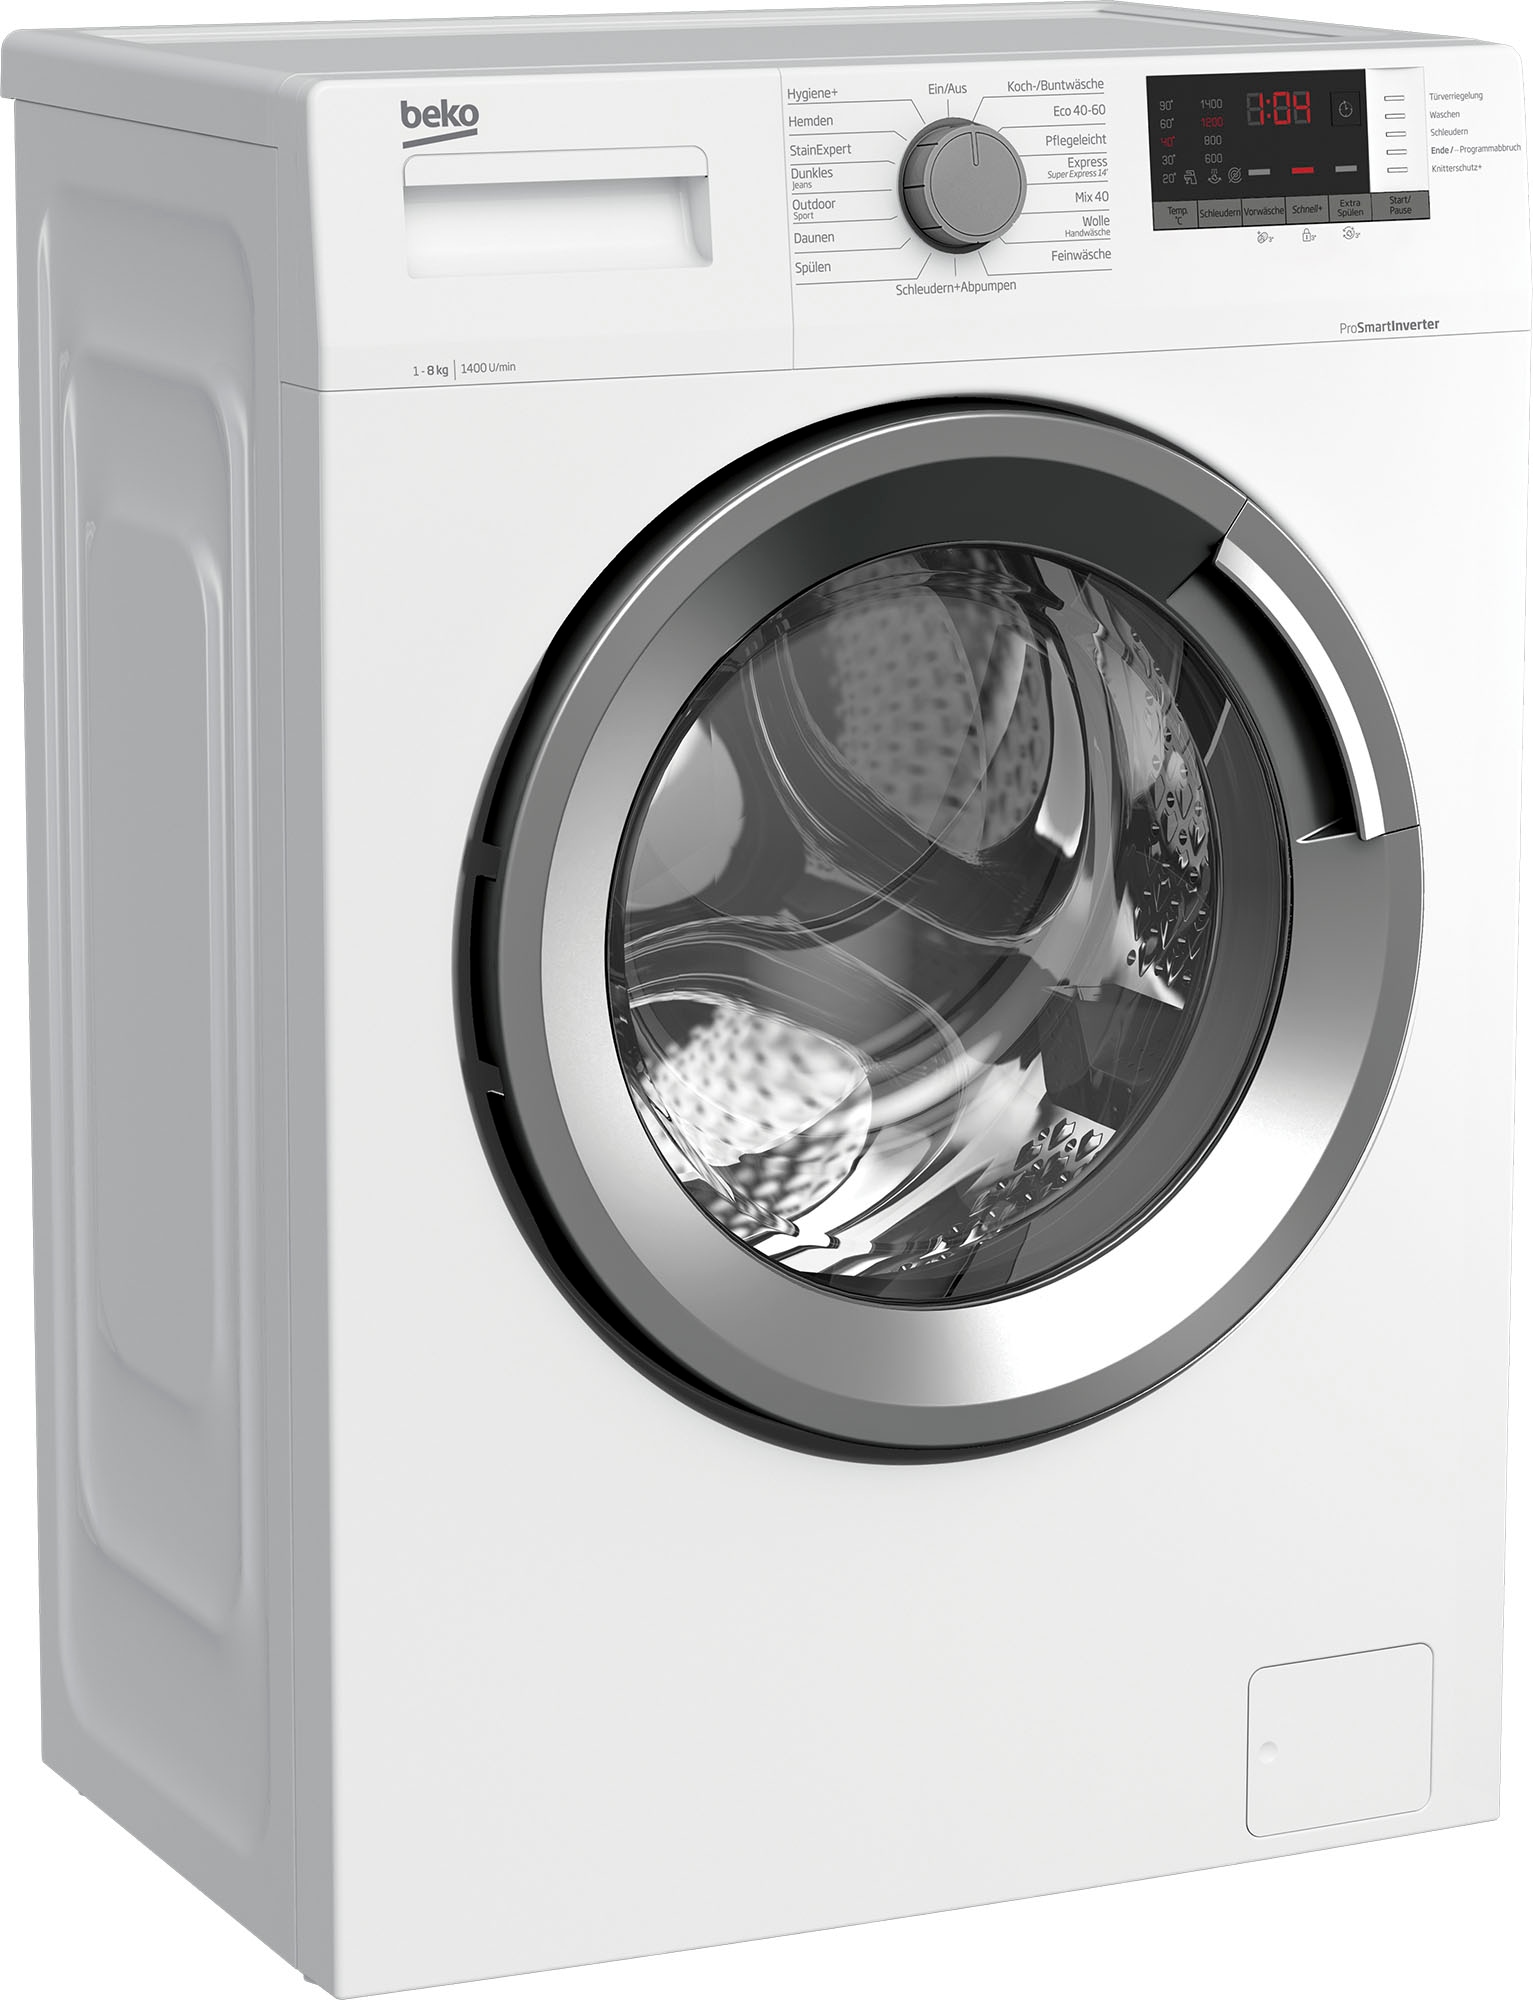 BEKO Waschmaschine »WMO822A«, WMO822A 1400 kg, bei online 8 7001440096, U/min